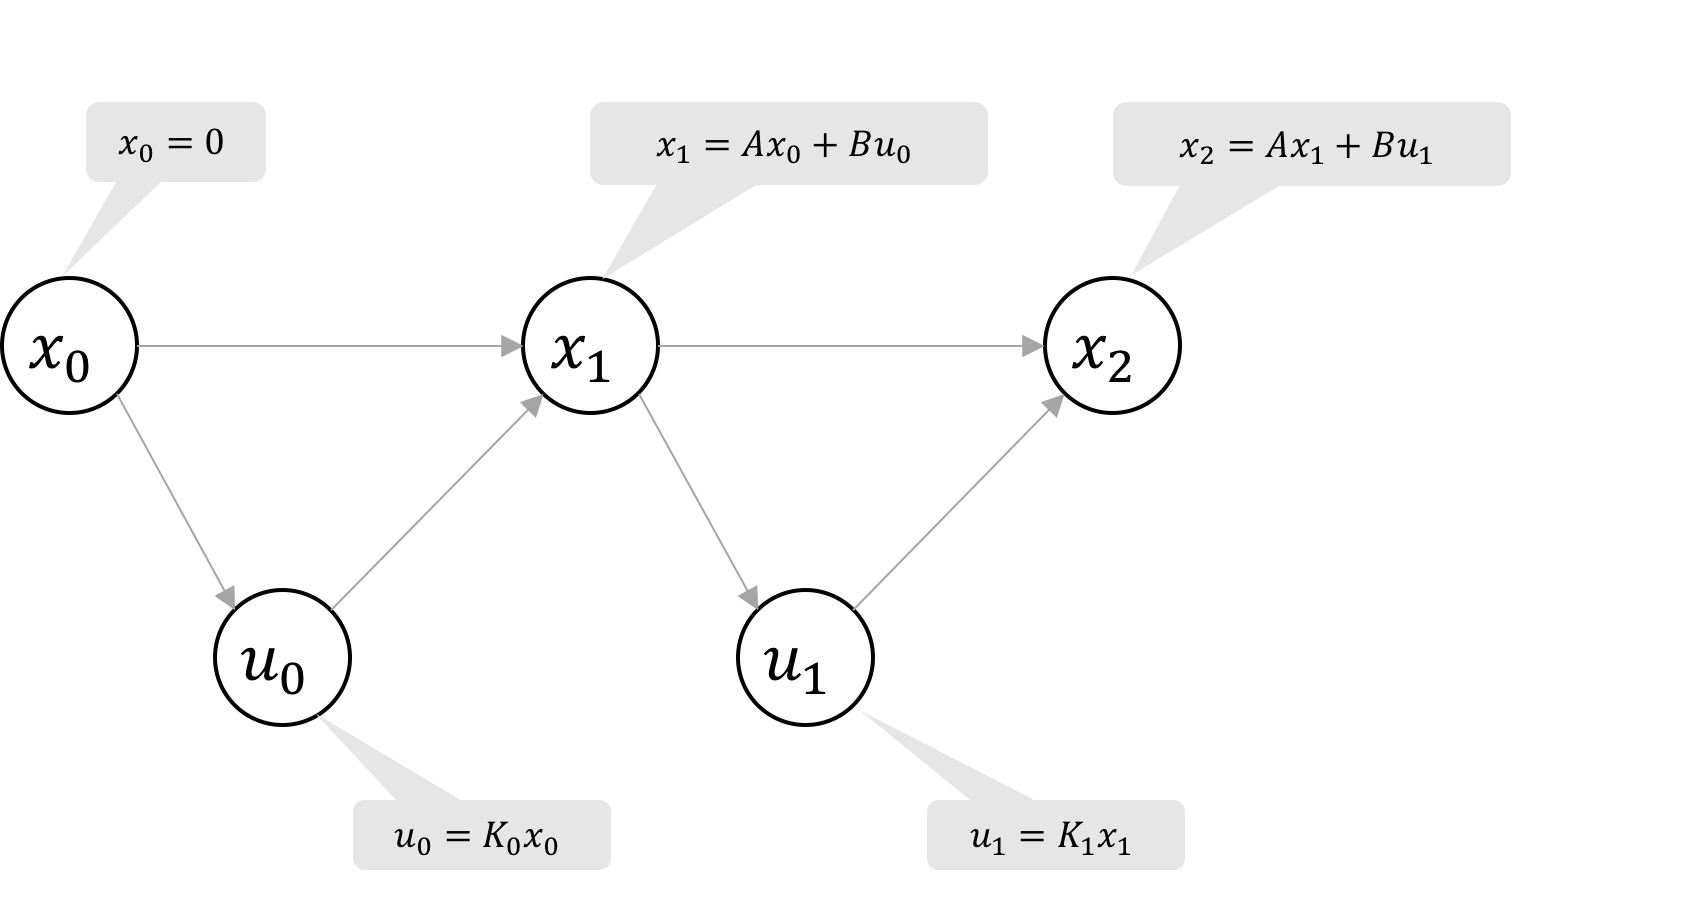 Bayes net